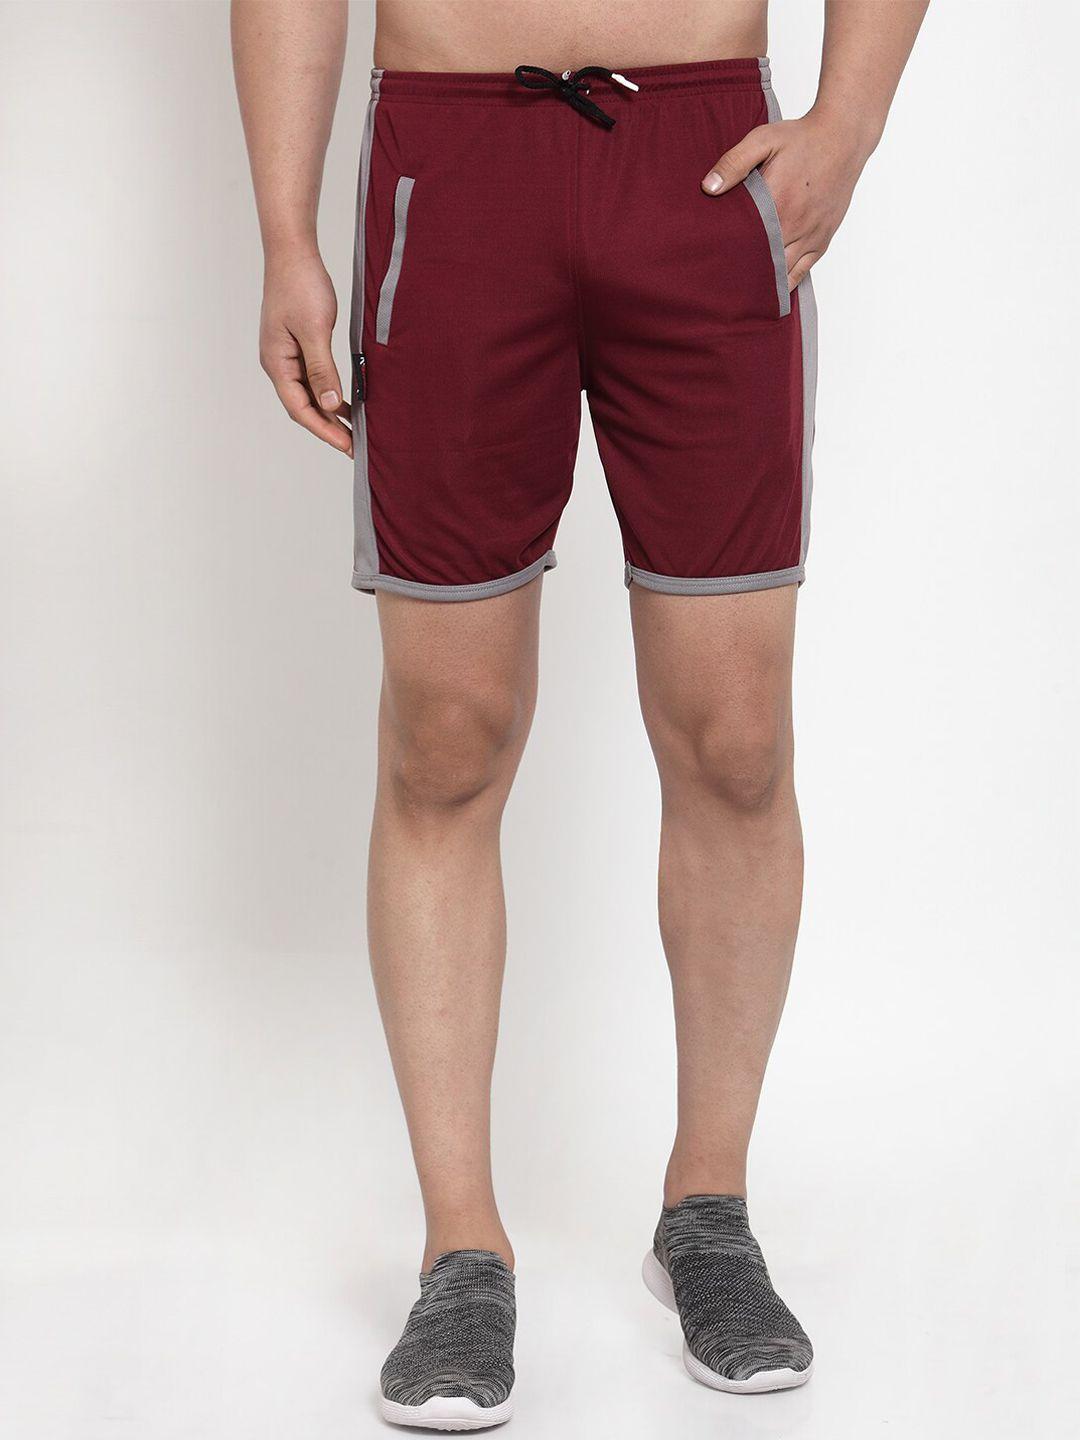 klotthe colourblocked rapid dry sports shorts